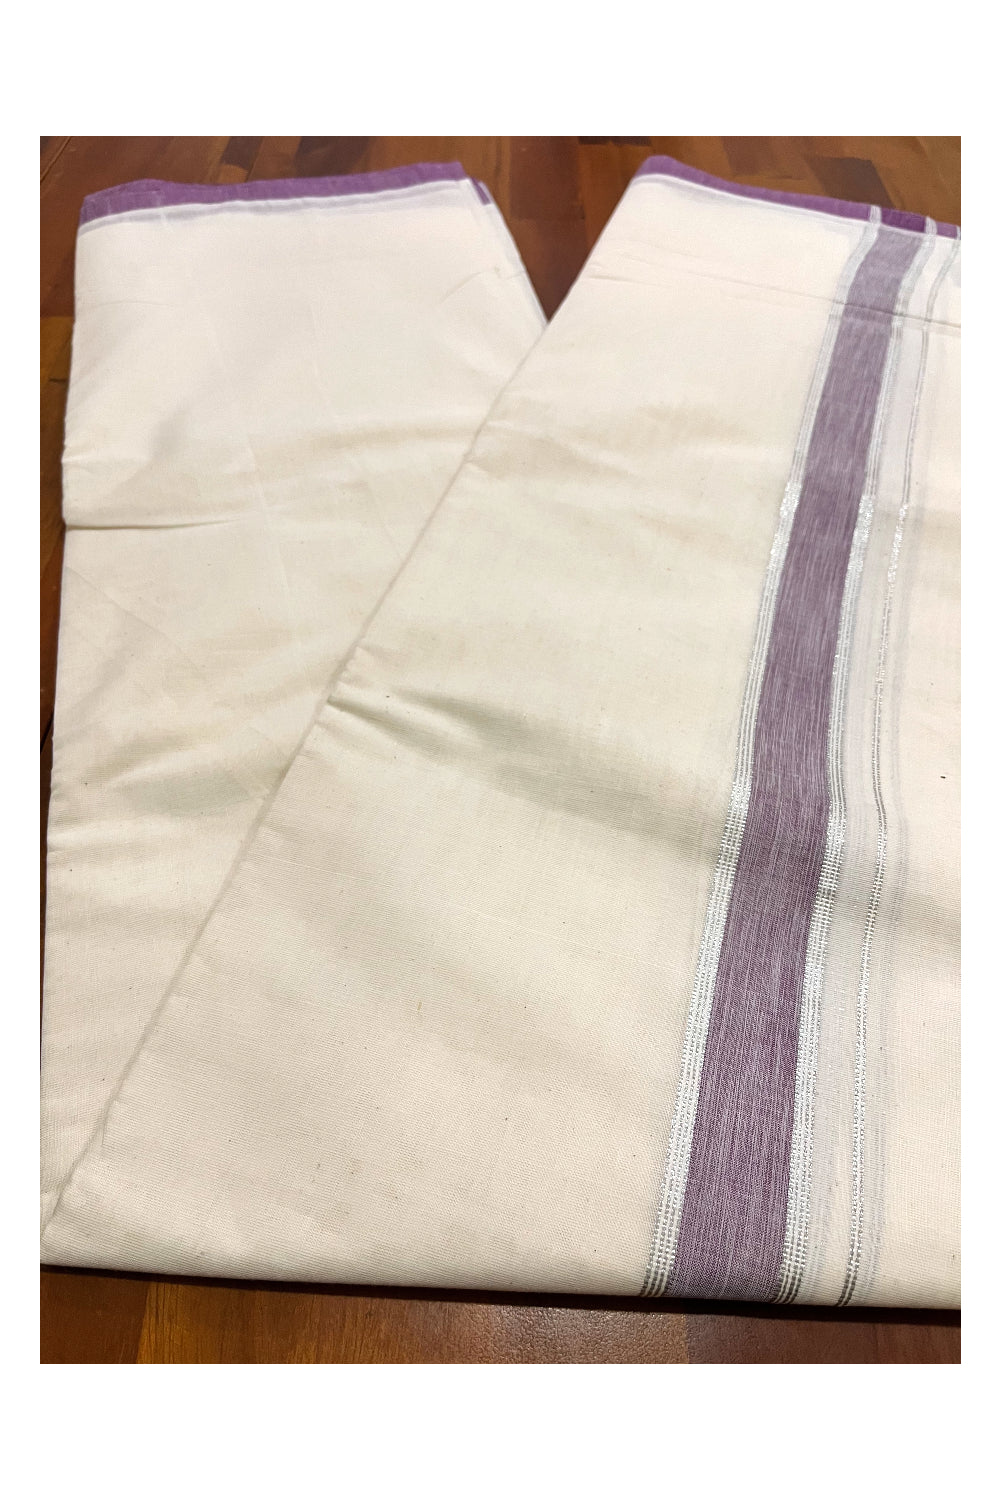 Cotton Double Mundu with Purple and Silver Kasavu Kara (South Indian Kerala Dhoti)